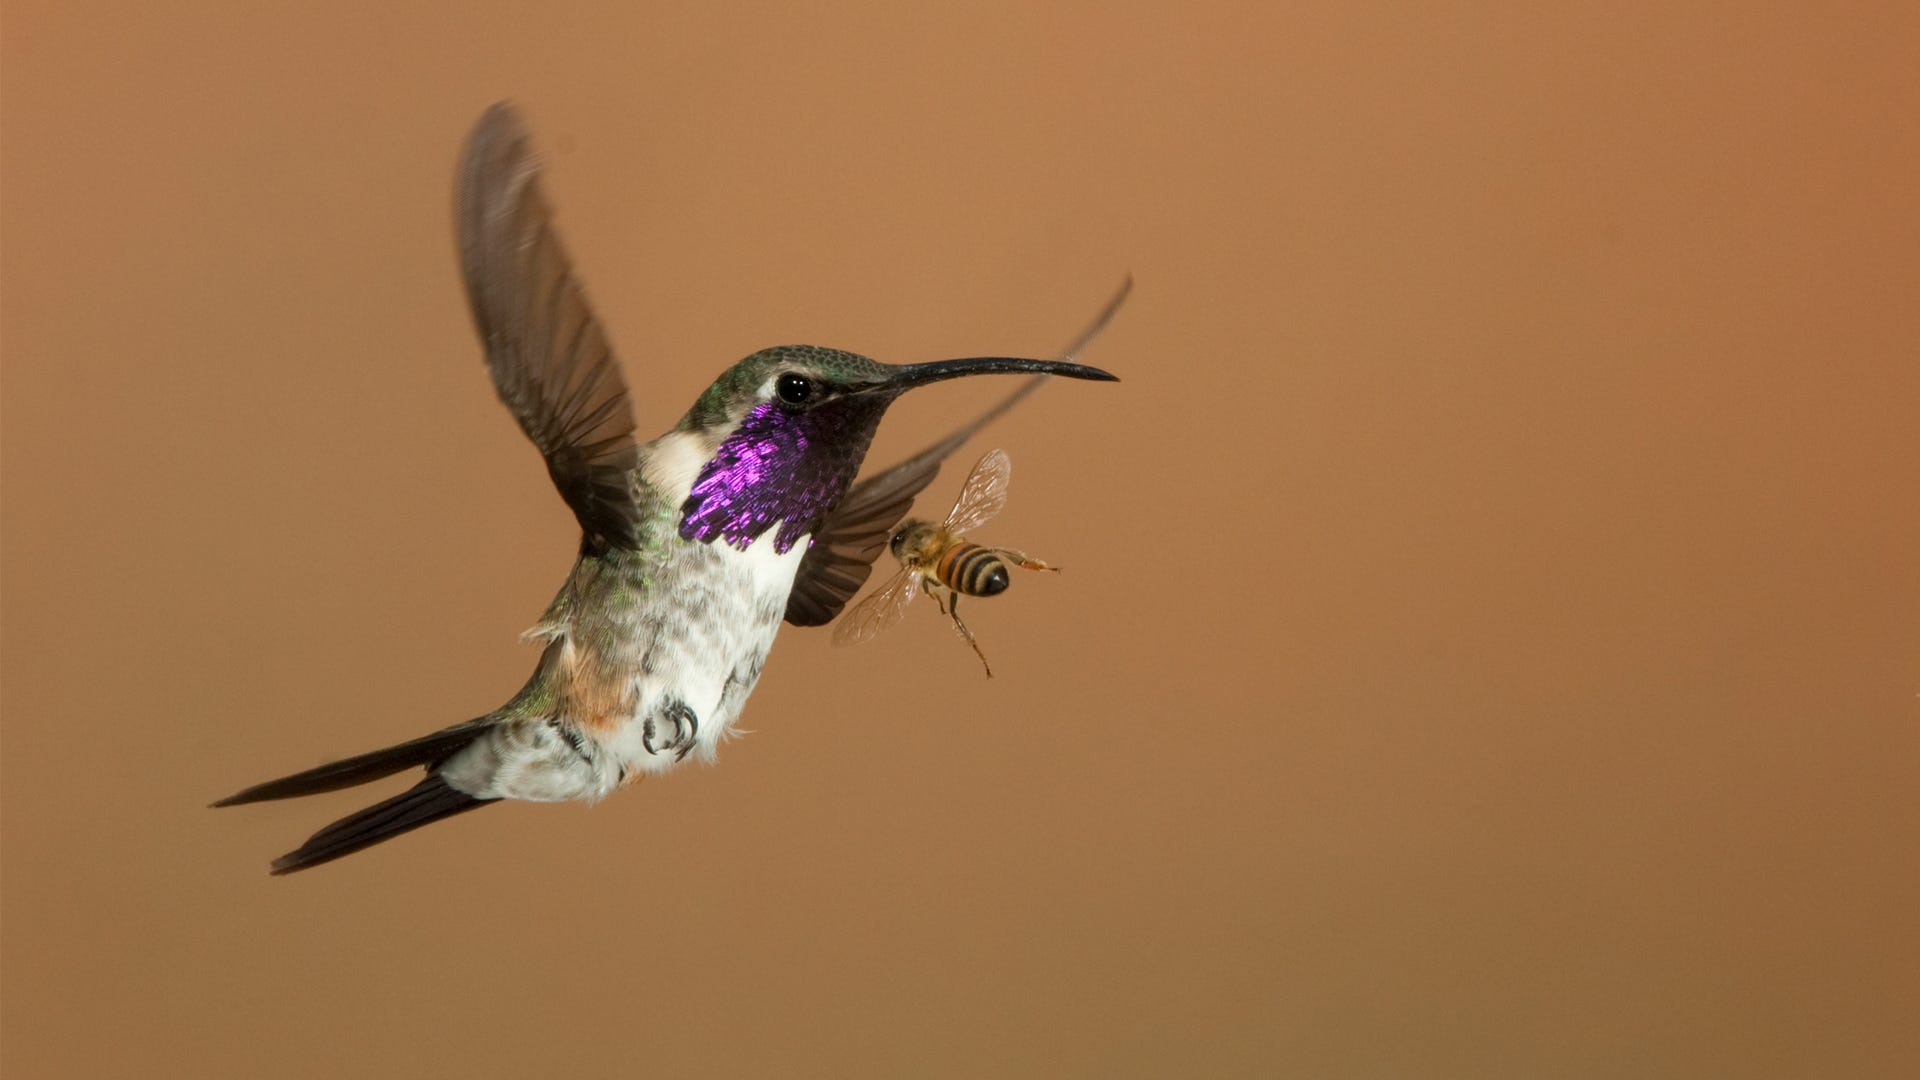 Battling Bees at Hummingbird Feeders